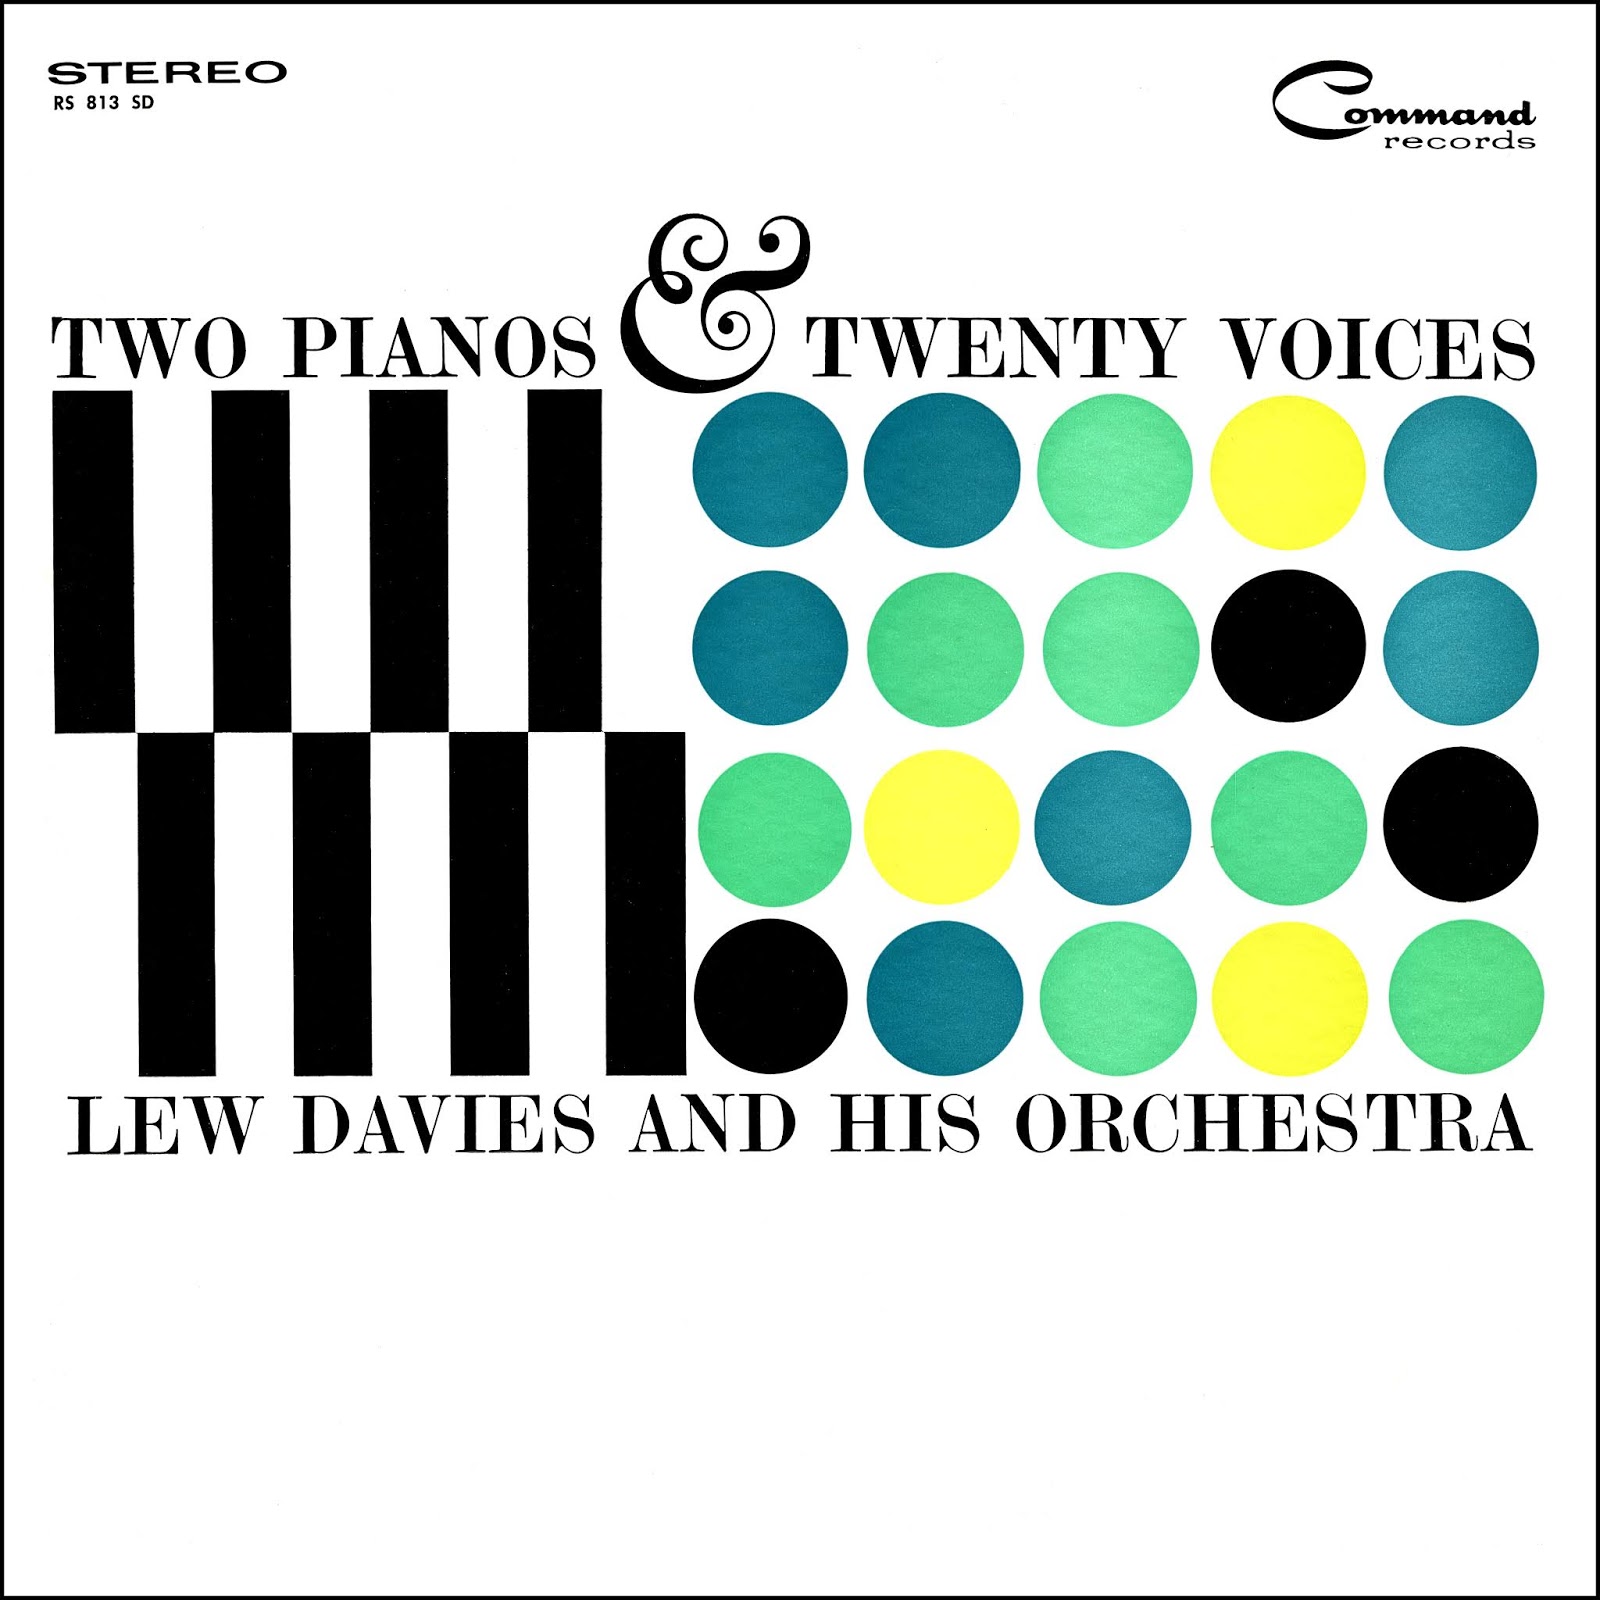 Blue Note records обложки. Музыкальная обложка 1960. 1/2 Orchestra. Jazz album Covers. Two pianos